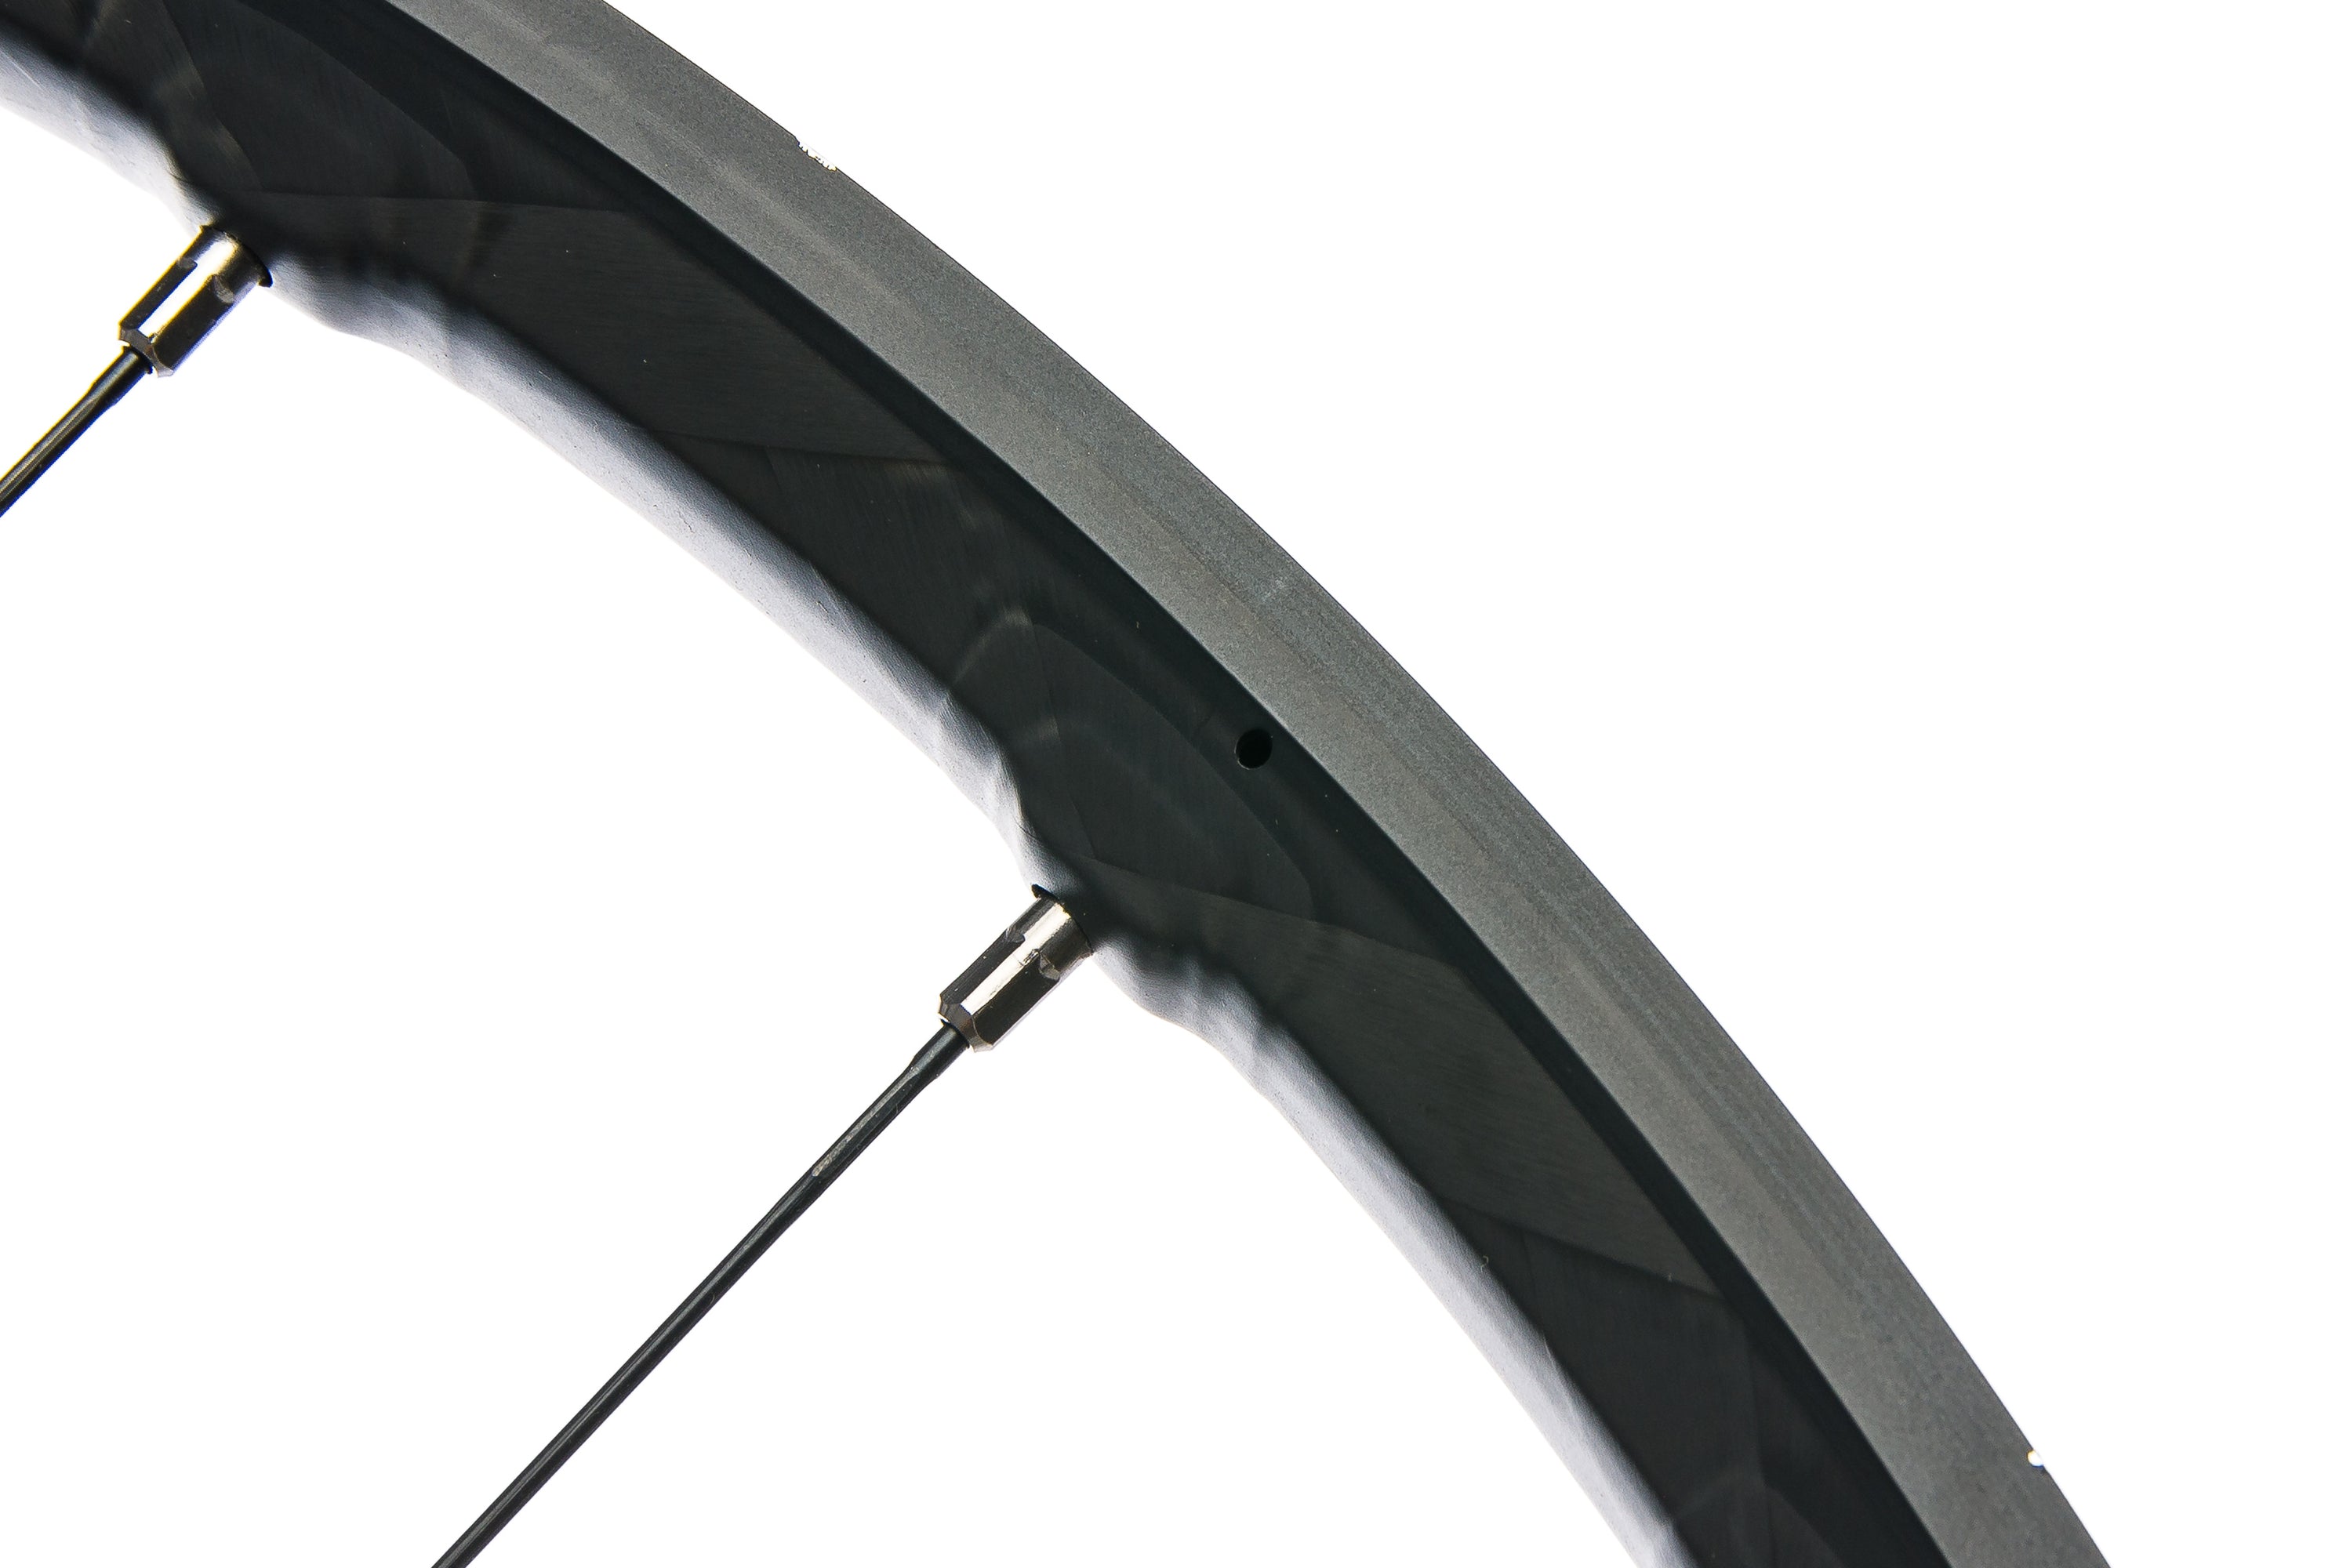 Shimano XTR WH-M9020-TL Carbon Tubeless 29" Wheelset detail 3